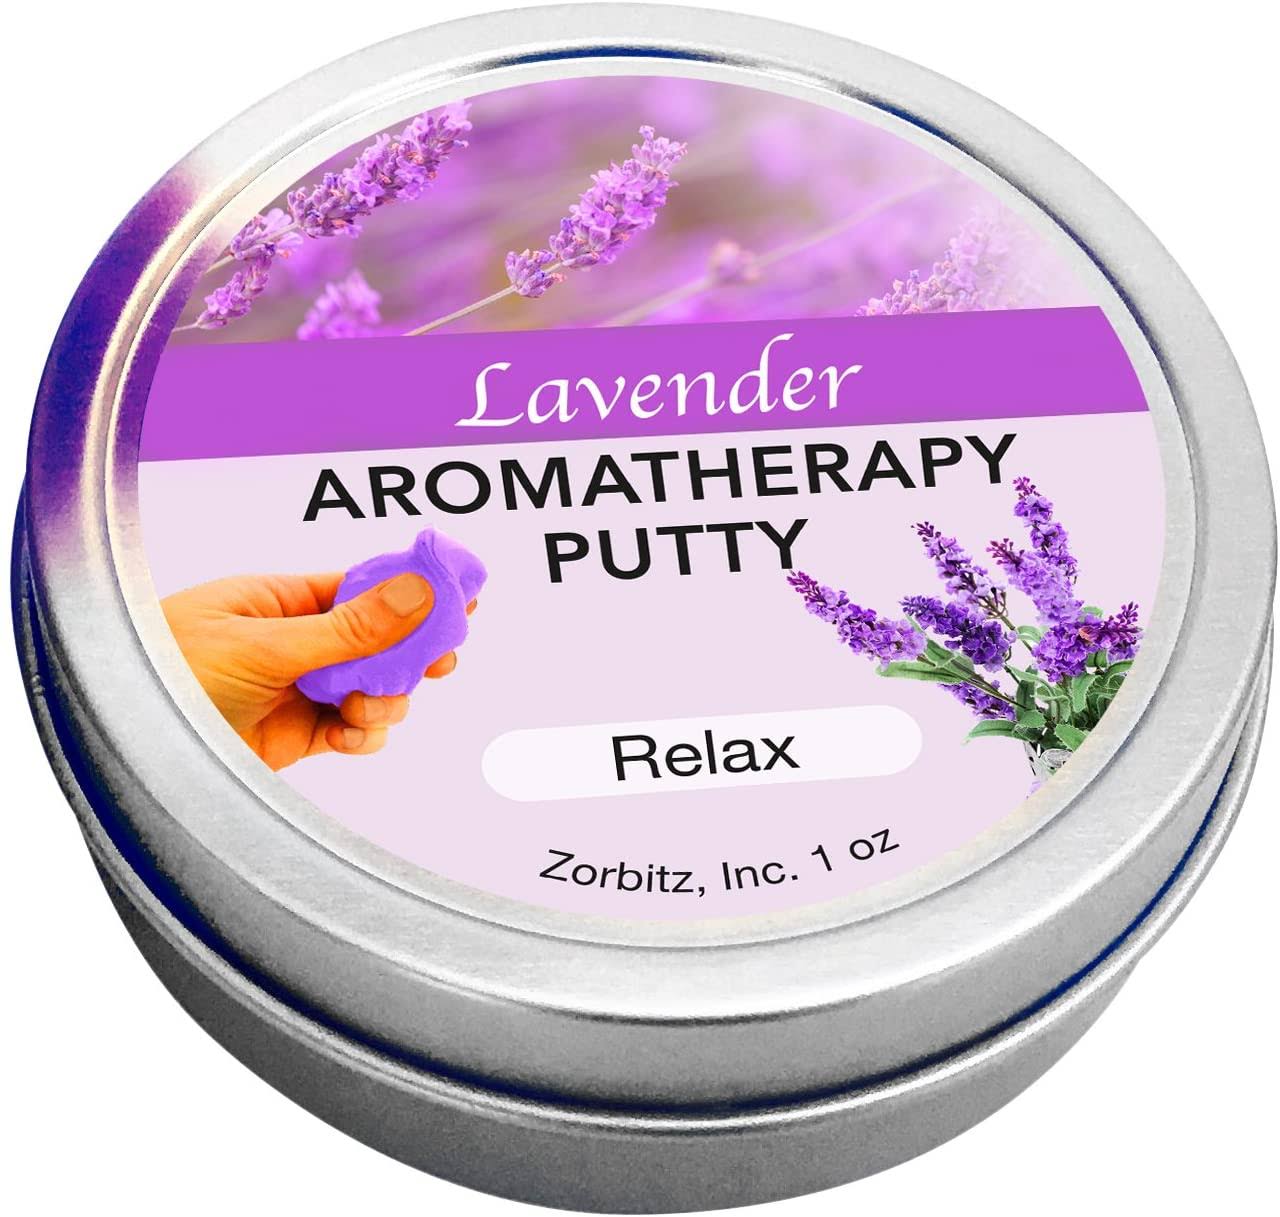 Zorbitz Lavender Aromatherapy Putty, Multi, 1 Oz